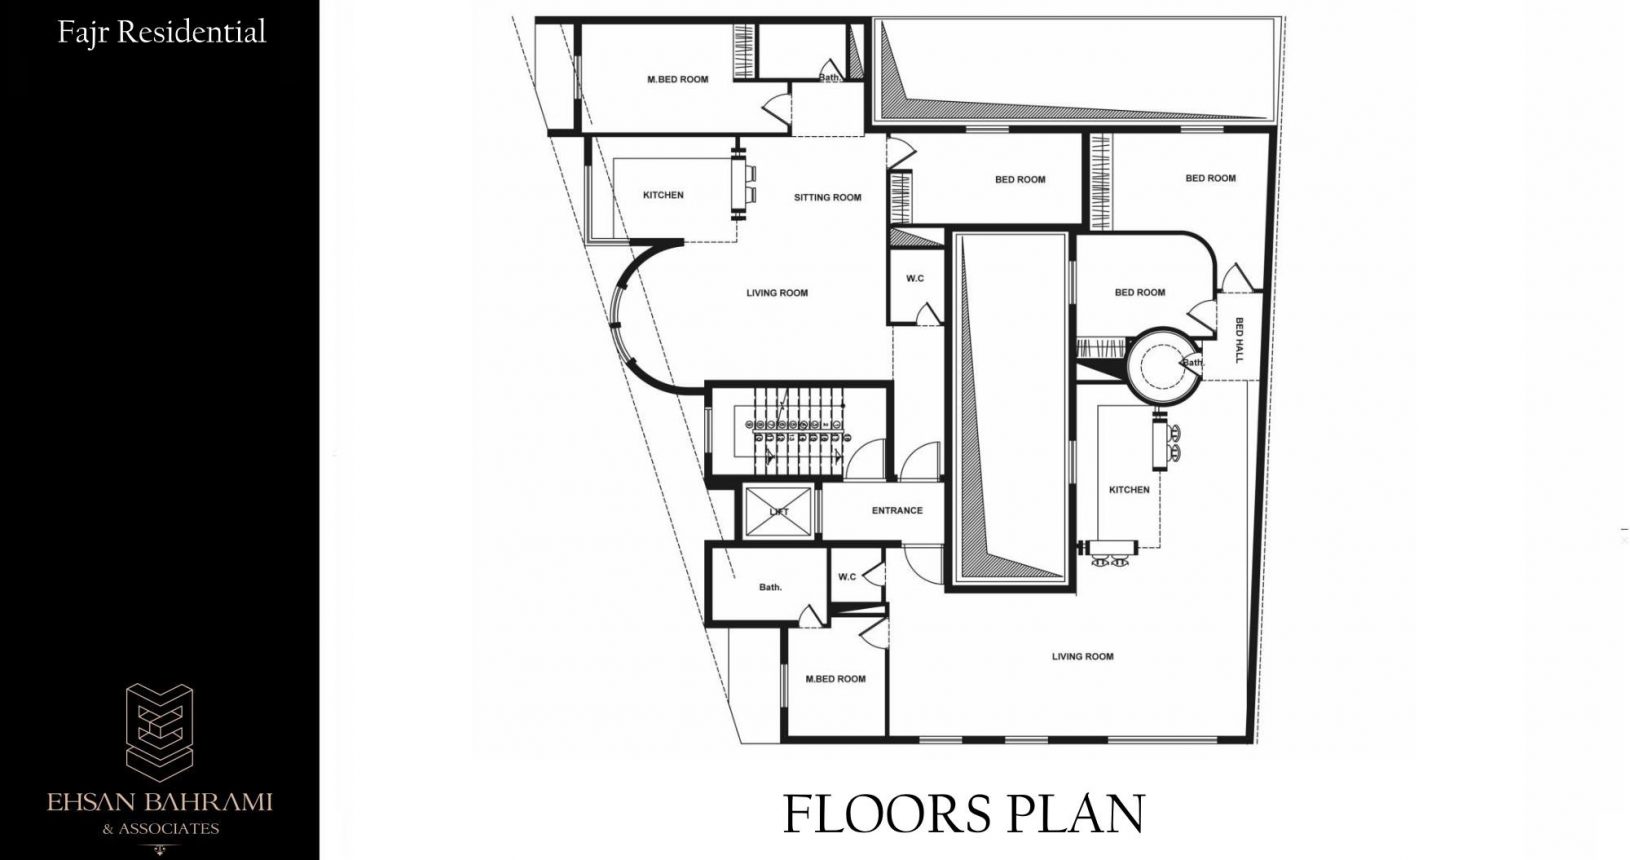 Fajr Residential Building Floors Plan01 (1)